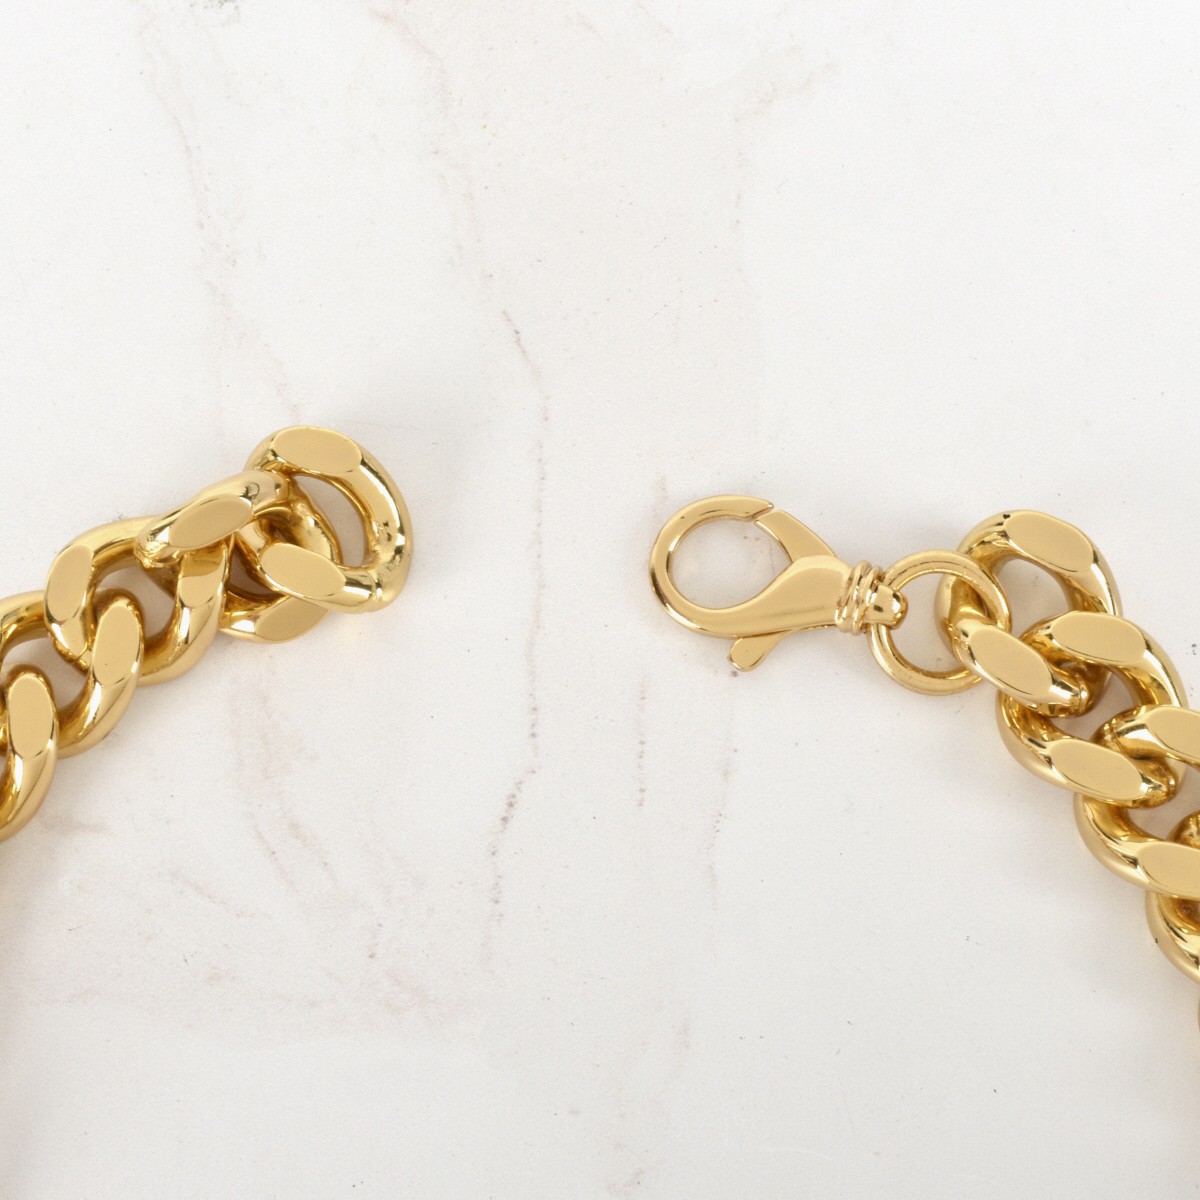 Ladies Gold Tone Cuban Link Necklace